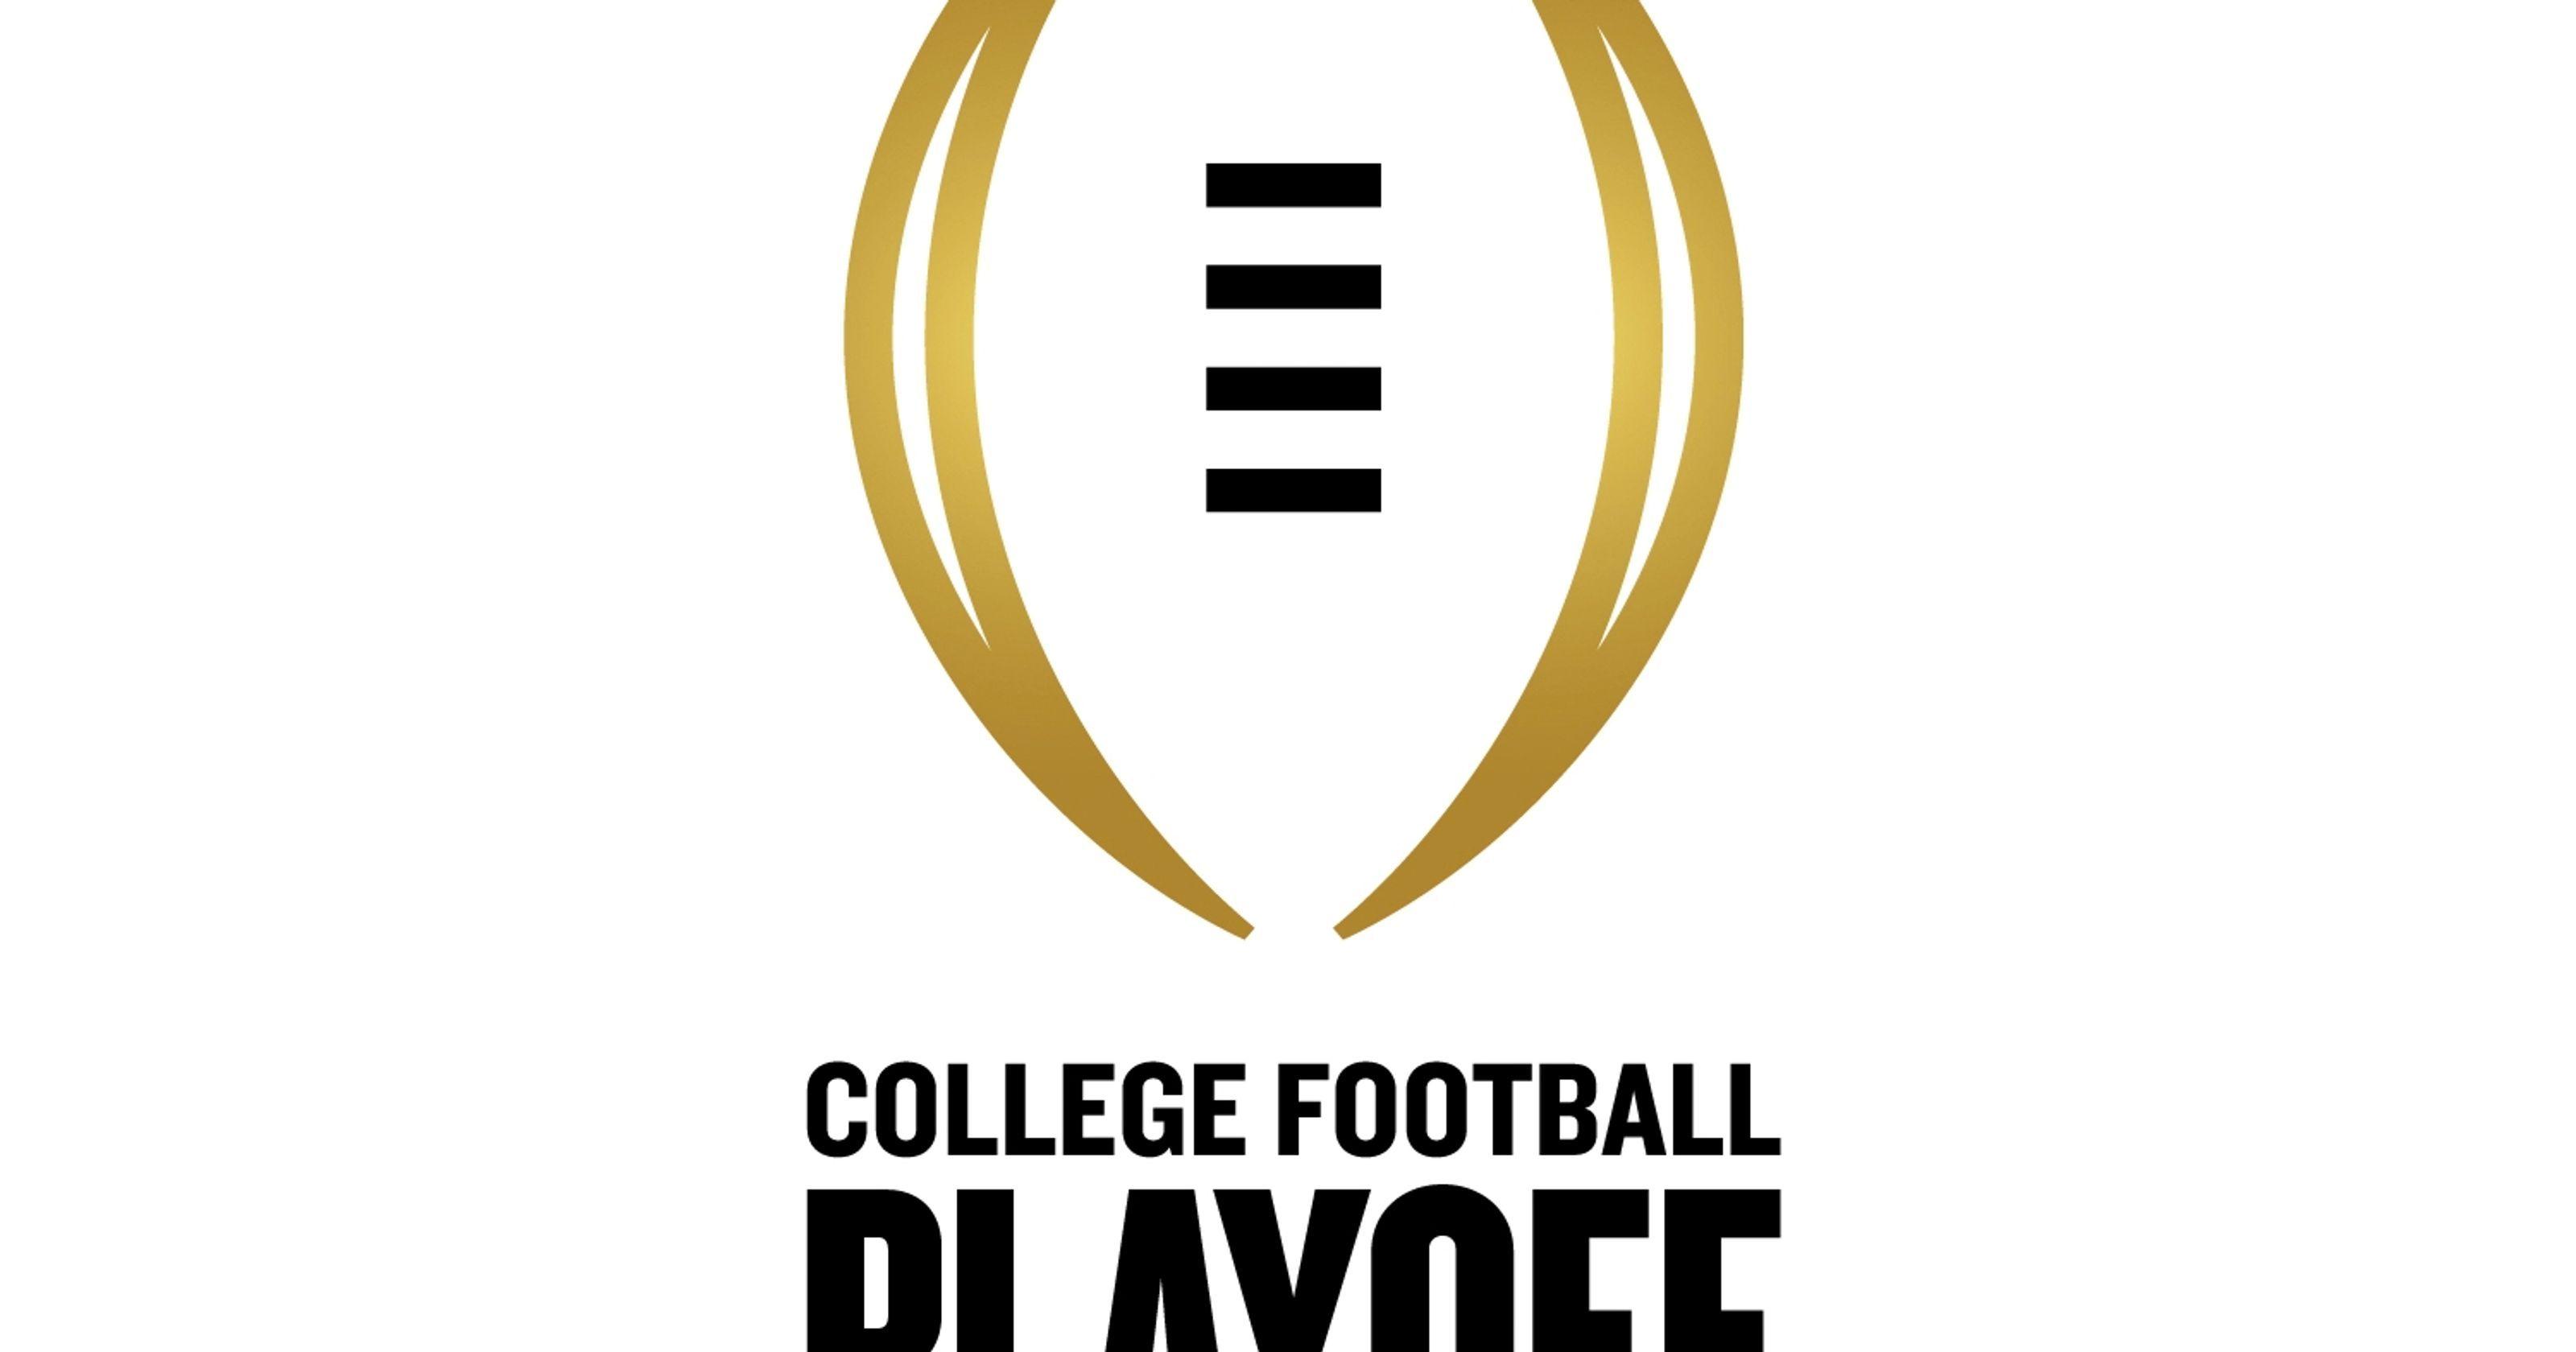 All College Football Logo - College Football Playoff unveils logo winner